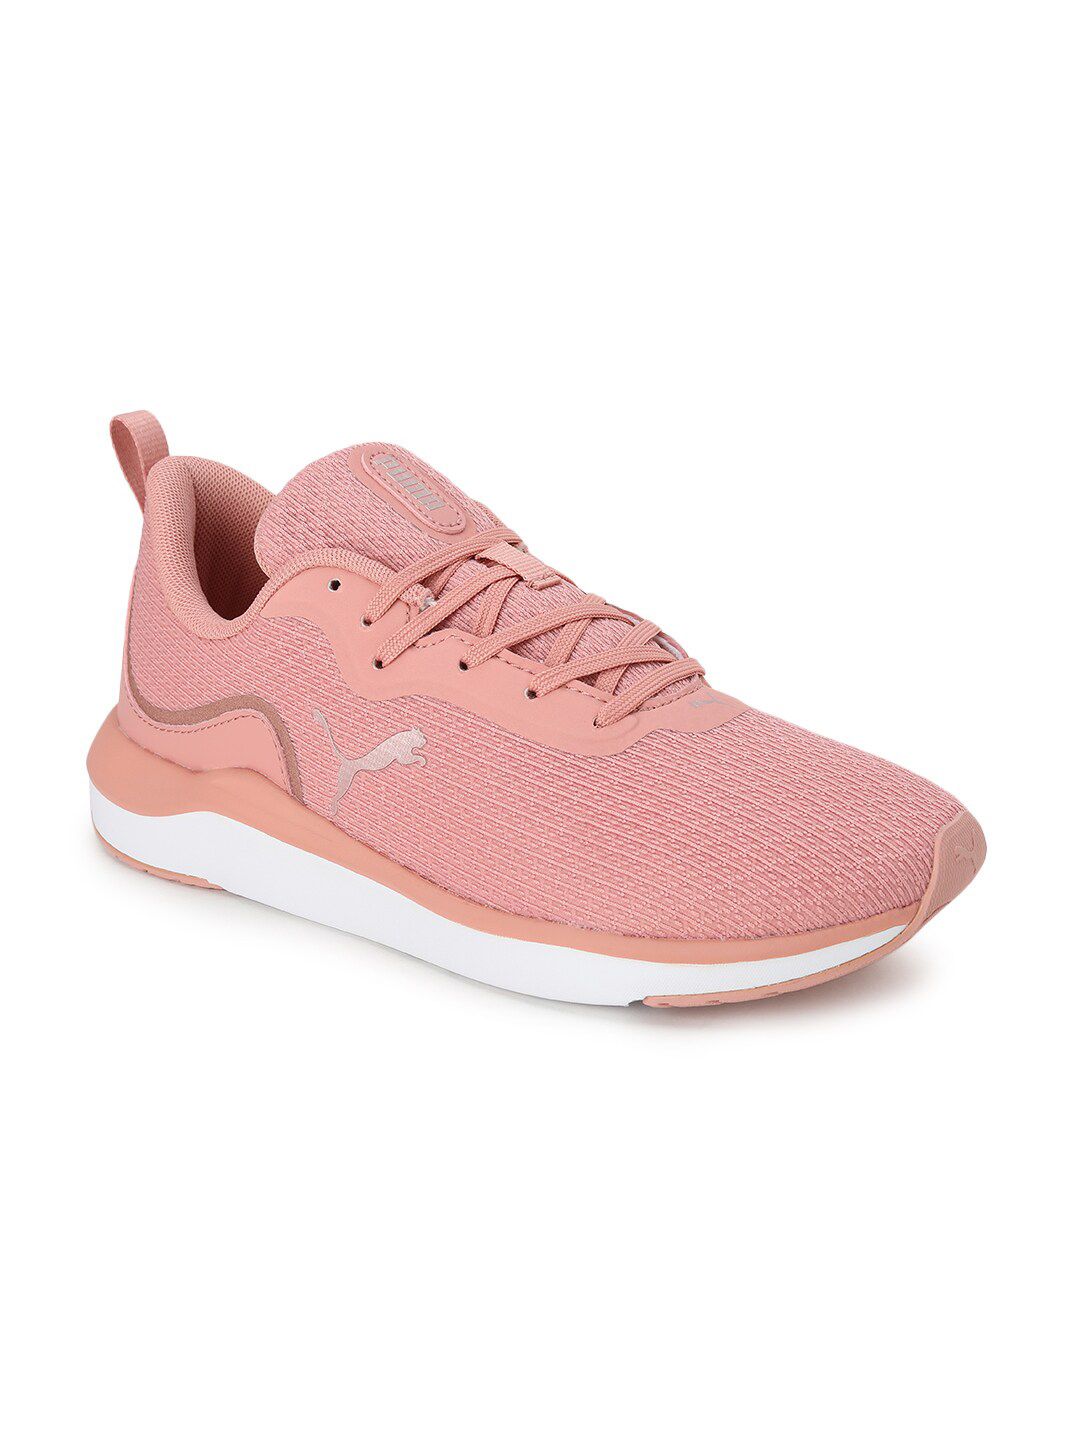 Puma Women Pink & White Textile Walking Shoes Price in India